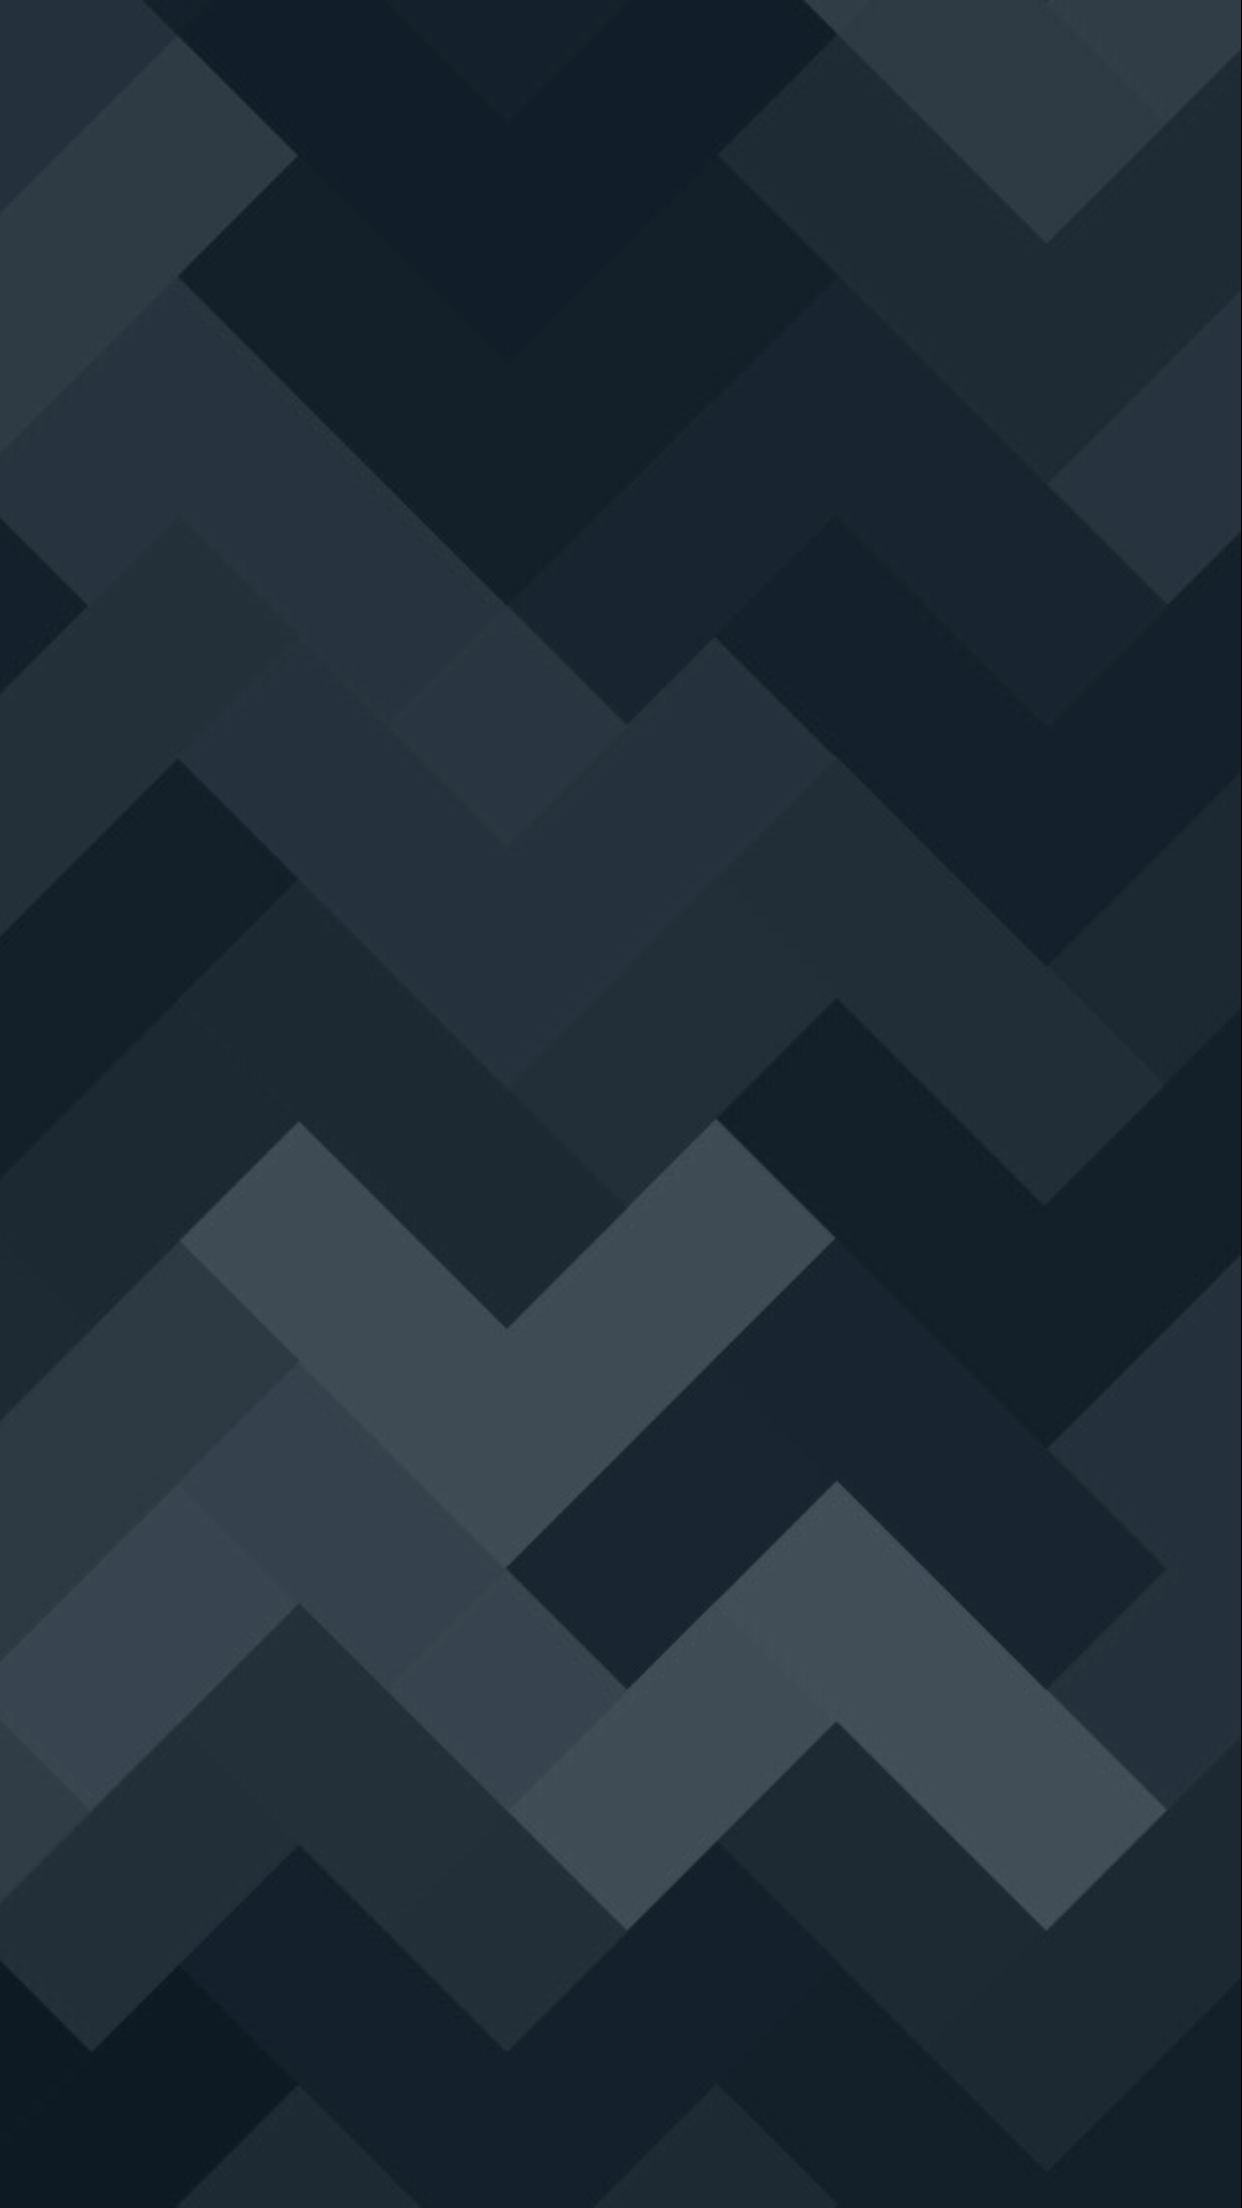 Free download Wallpaper of the week geometric wallpaper